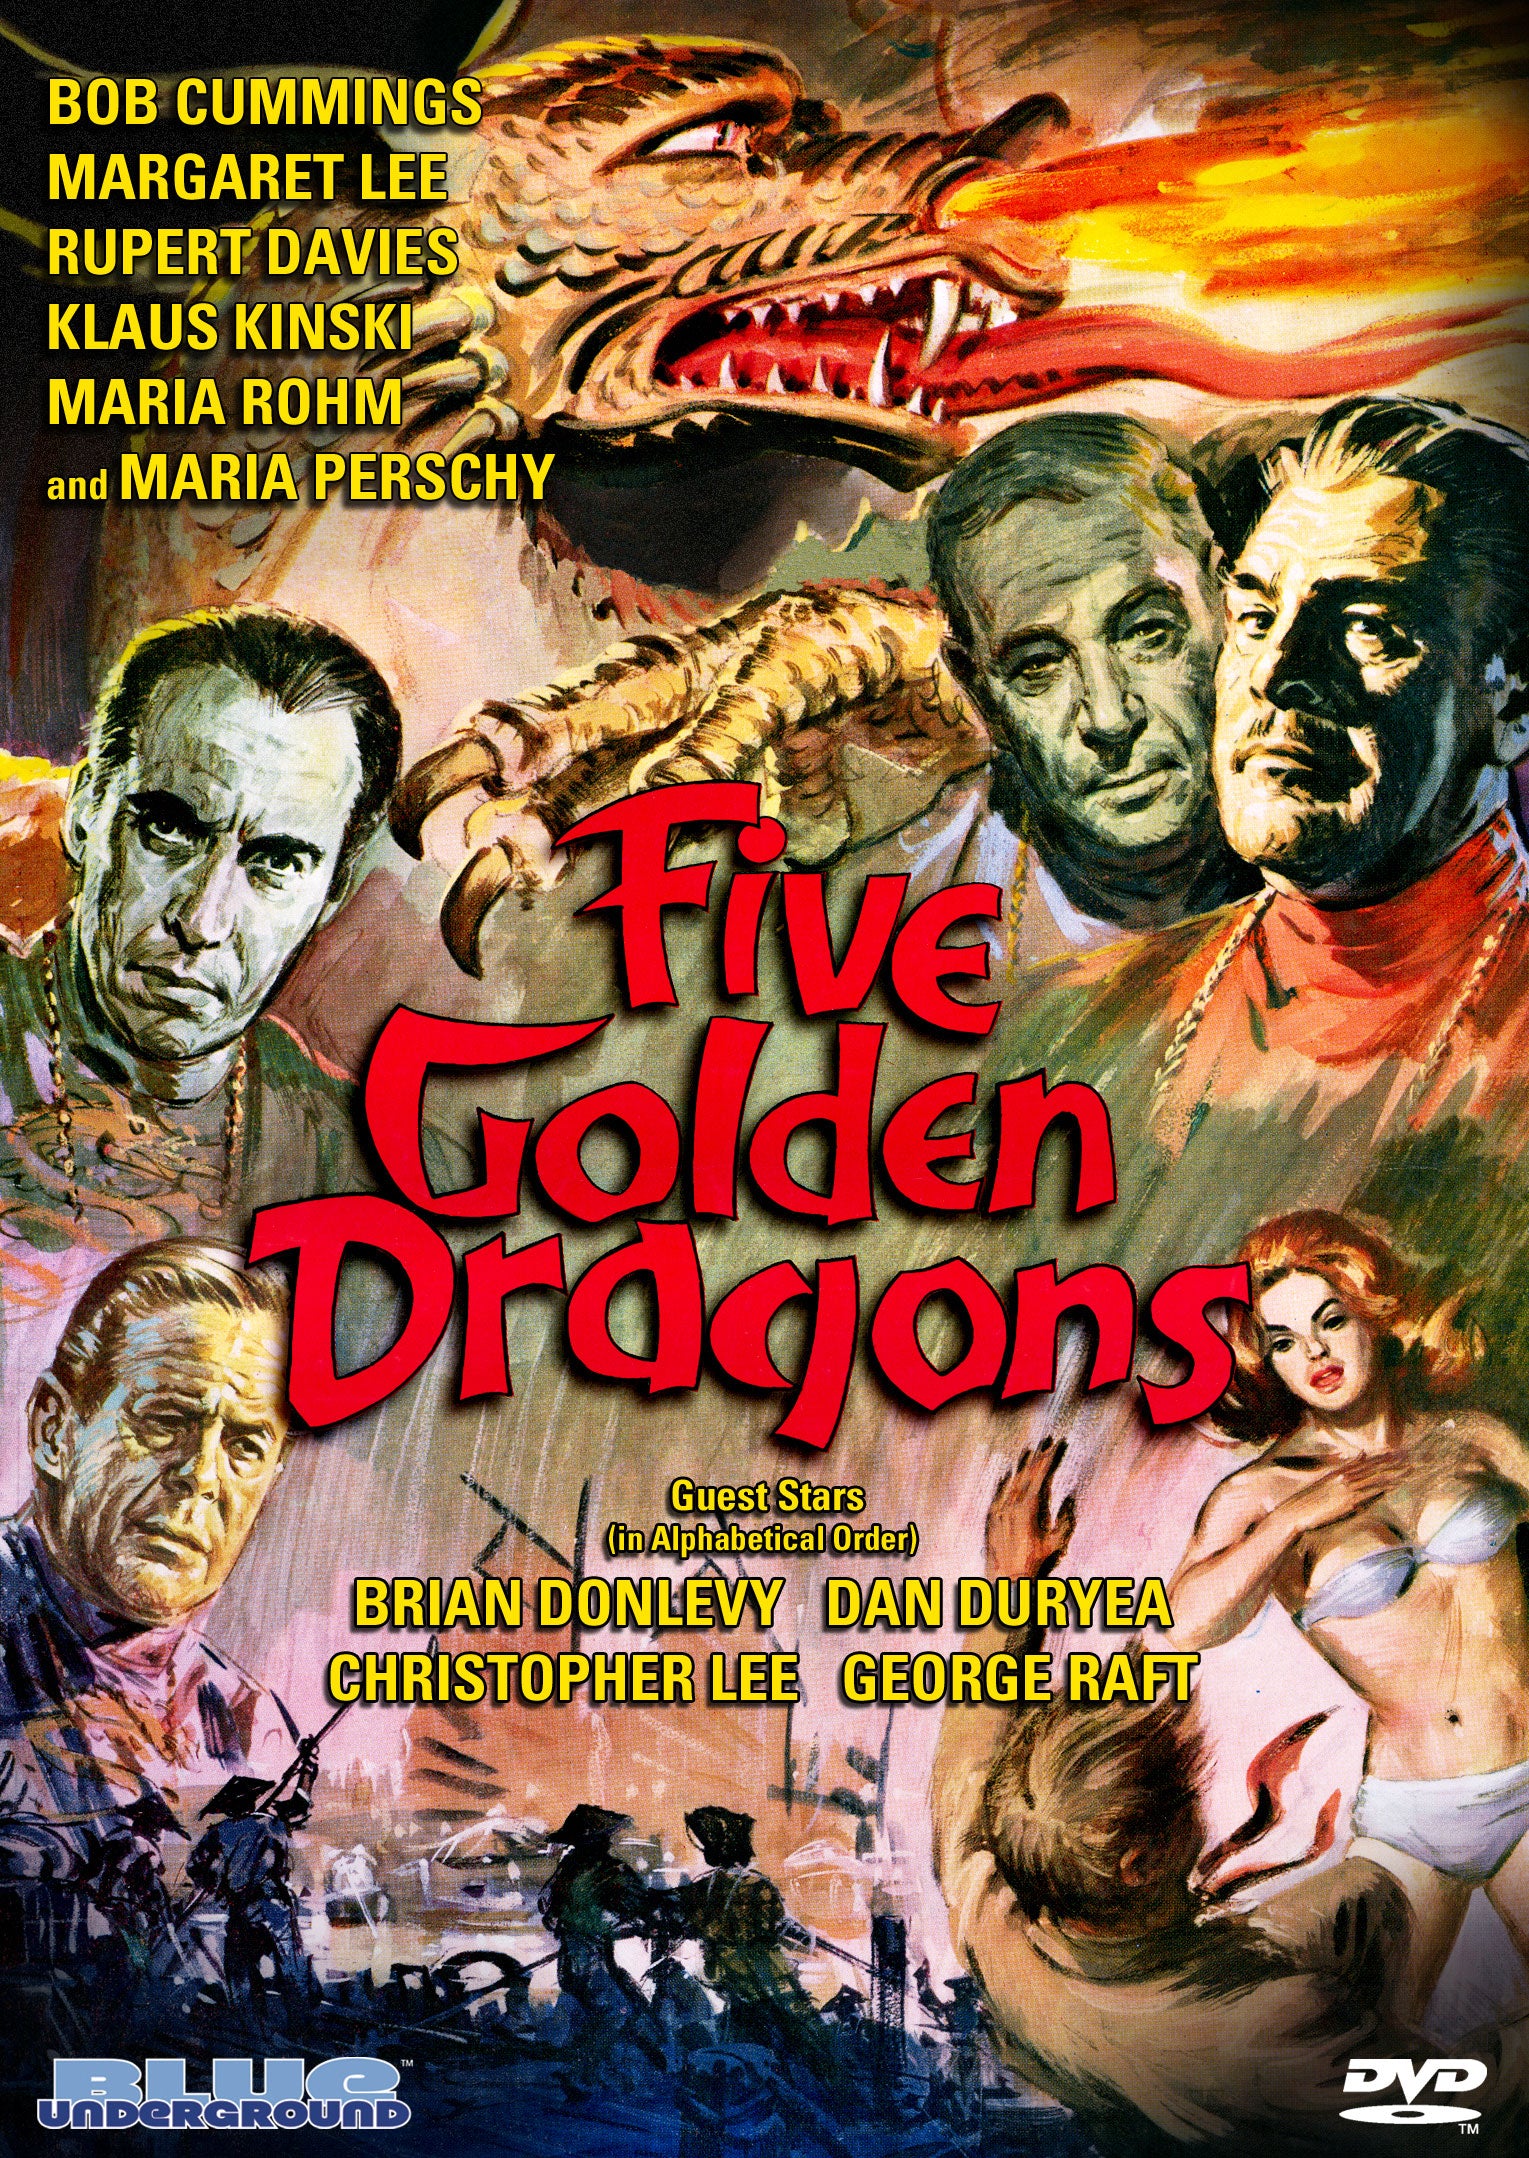 FIVE GOLDEN DRAGONS DVD